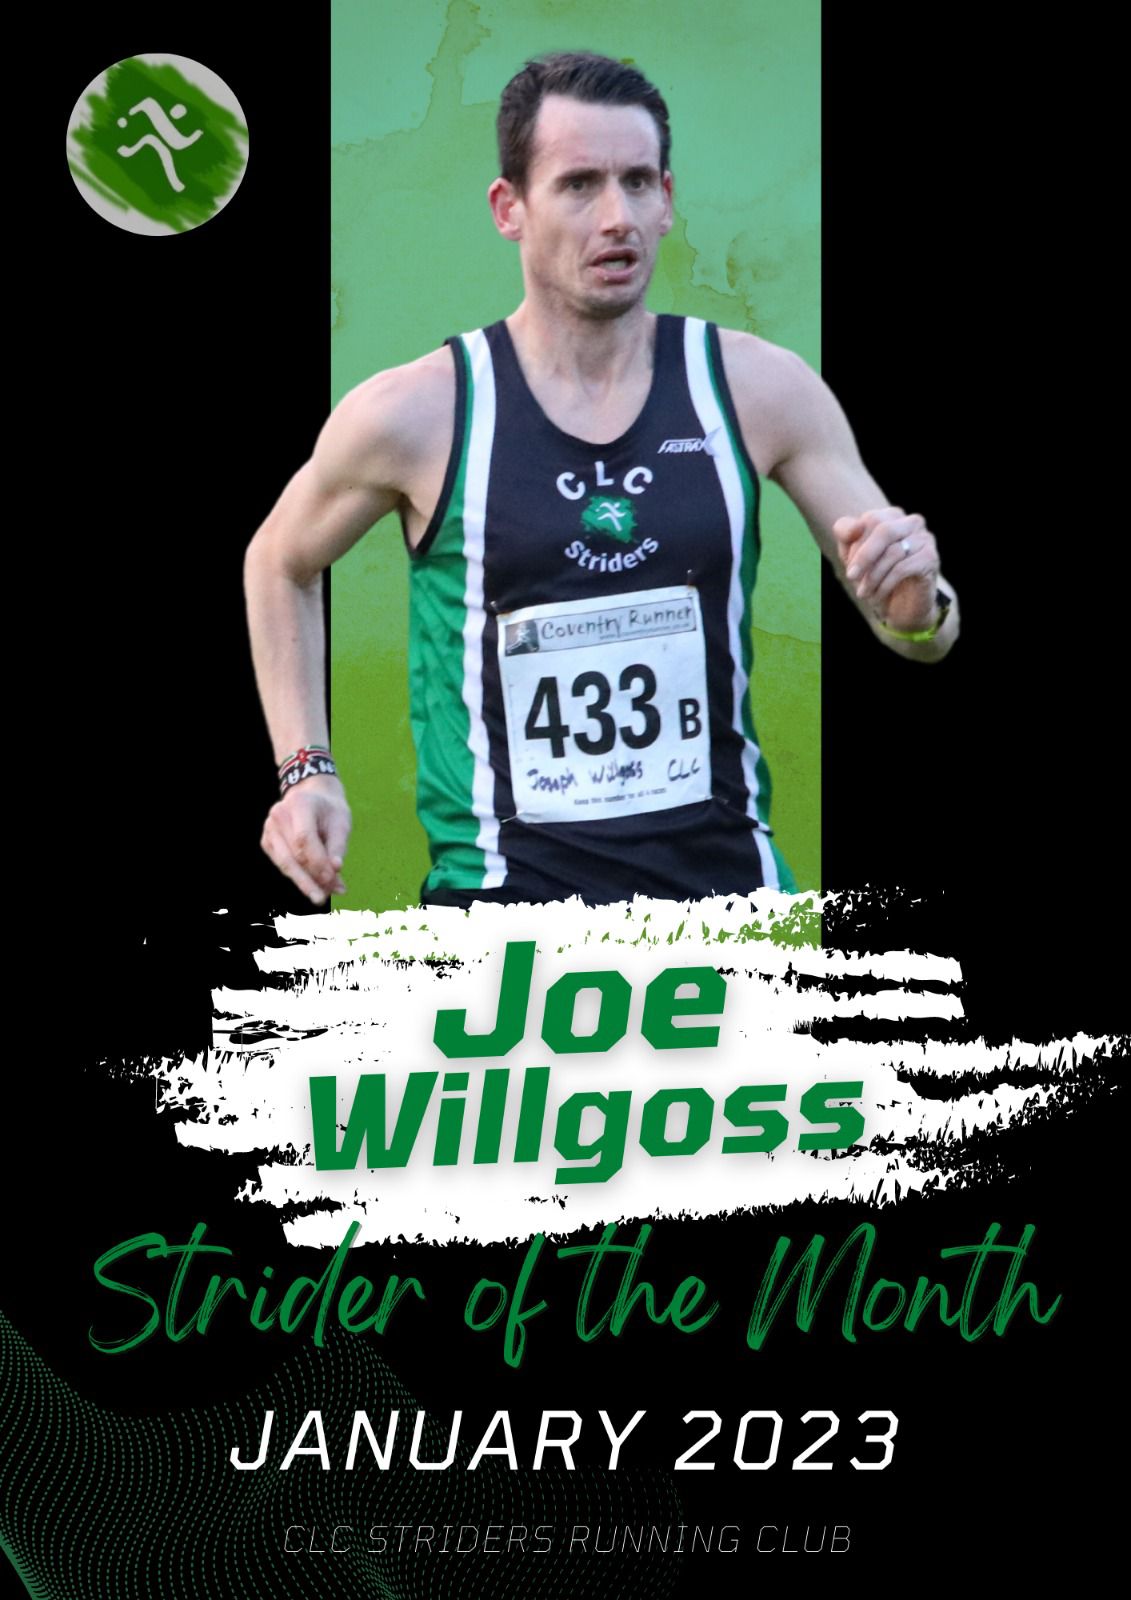 Strider of the month Joe Willgoss